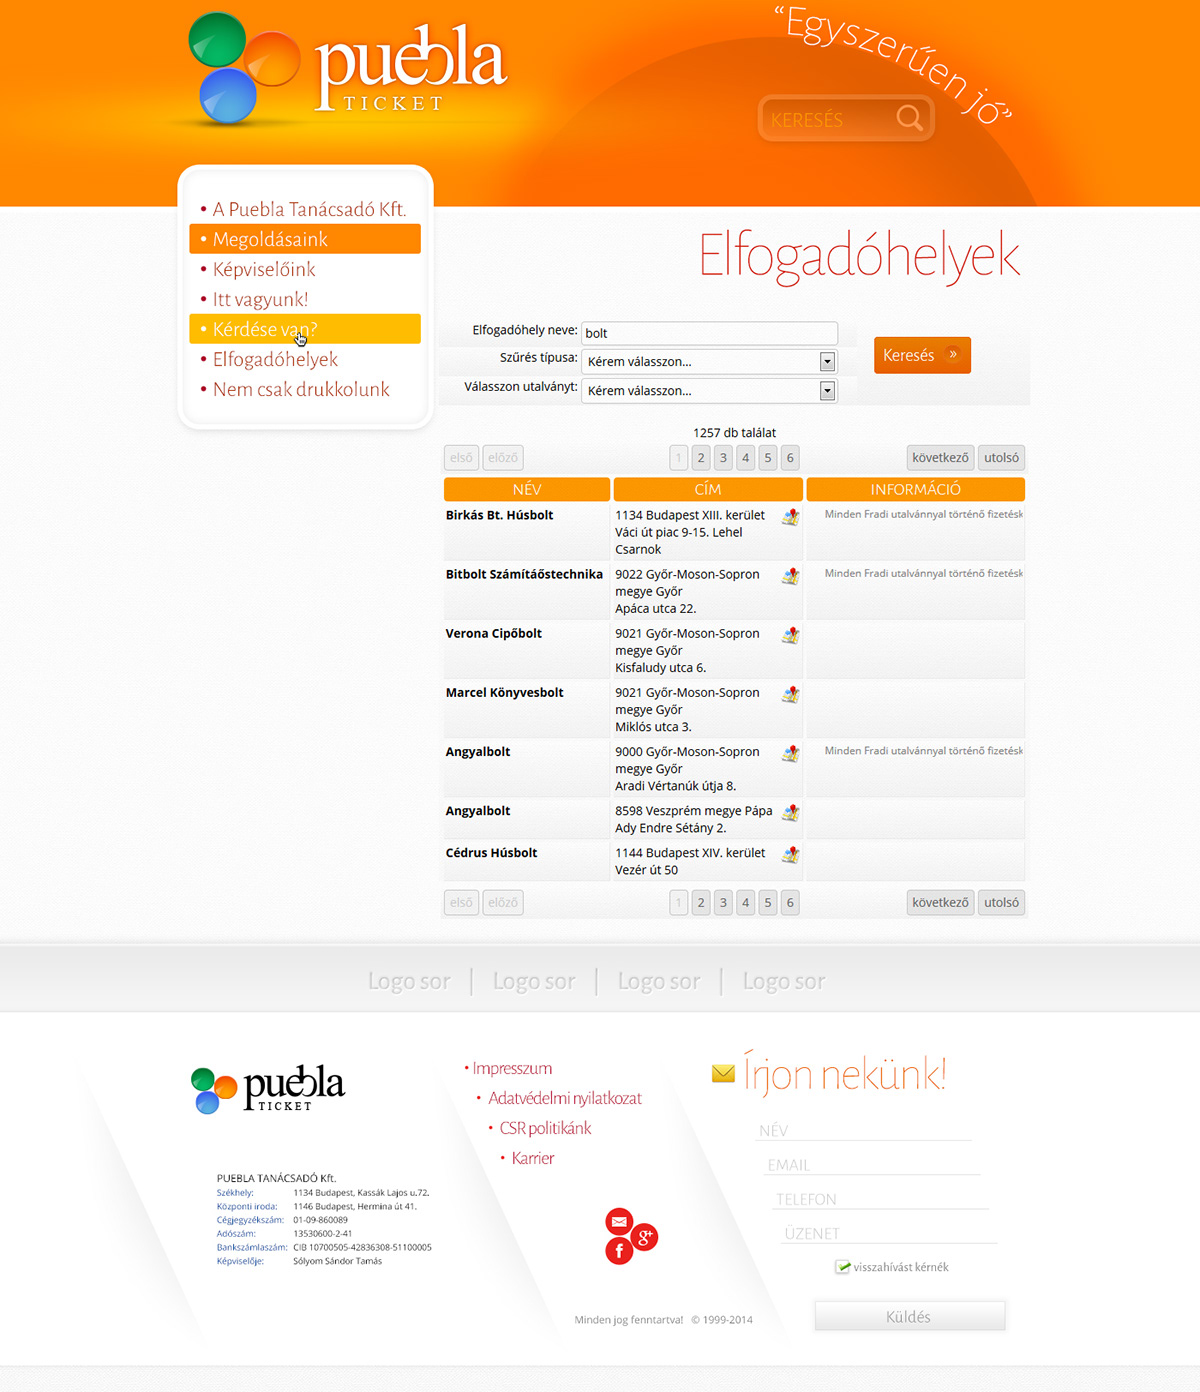 puebla ticket offer site logo redesign orange